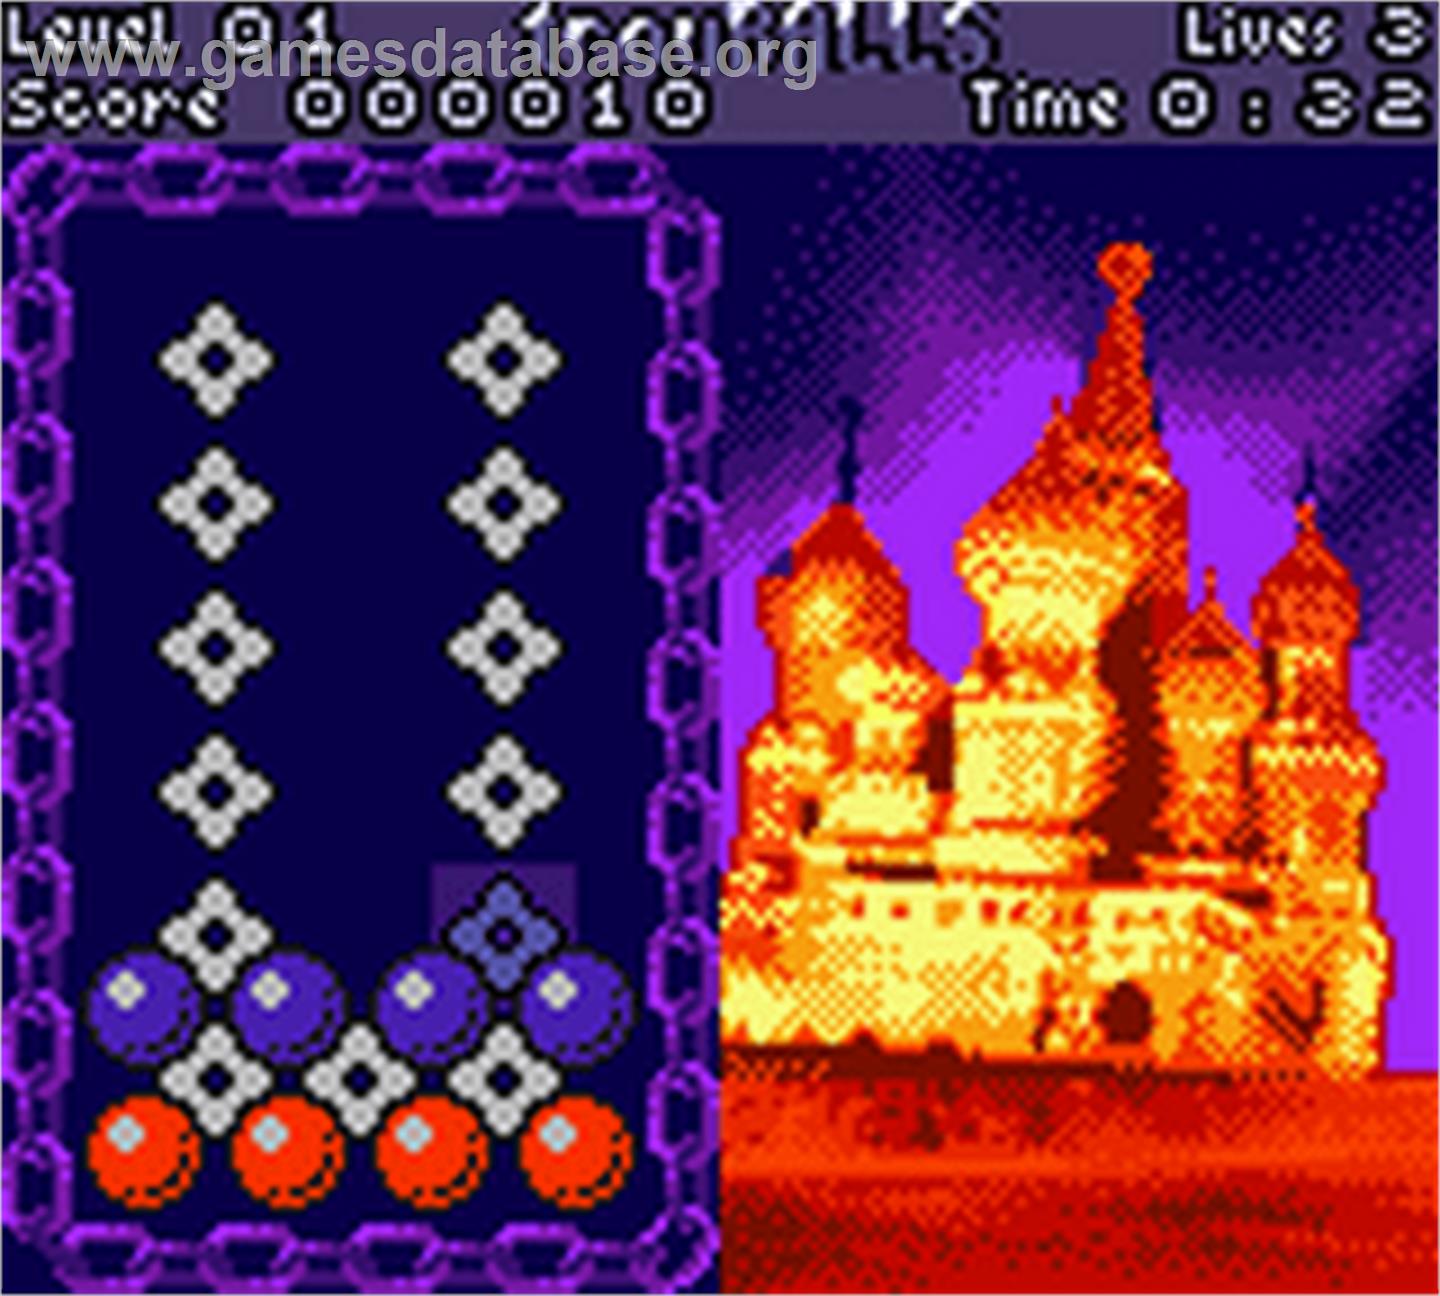 Trouballs - Nintendo Game Boy Color - Artwork - In Game